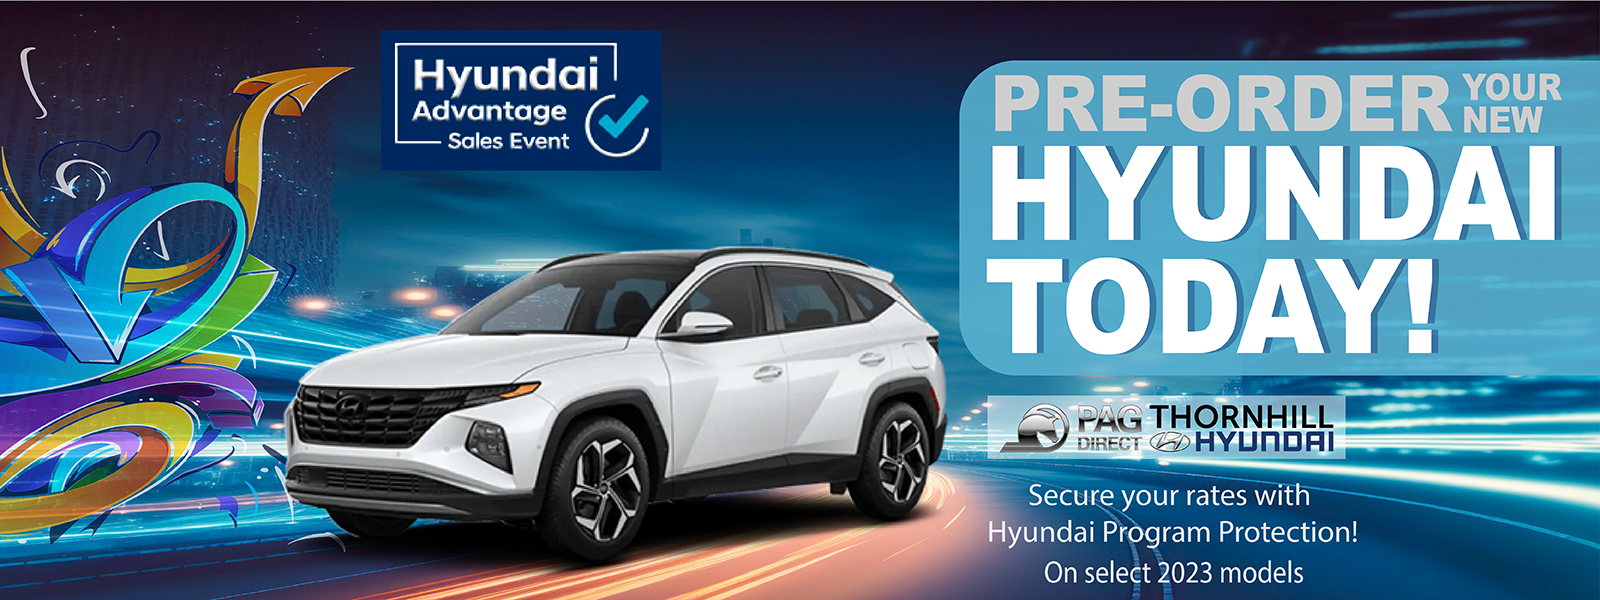 Pre-order your Hyundai